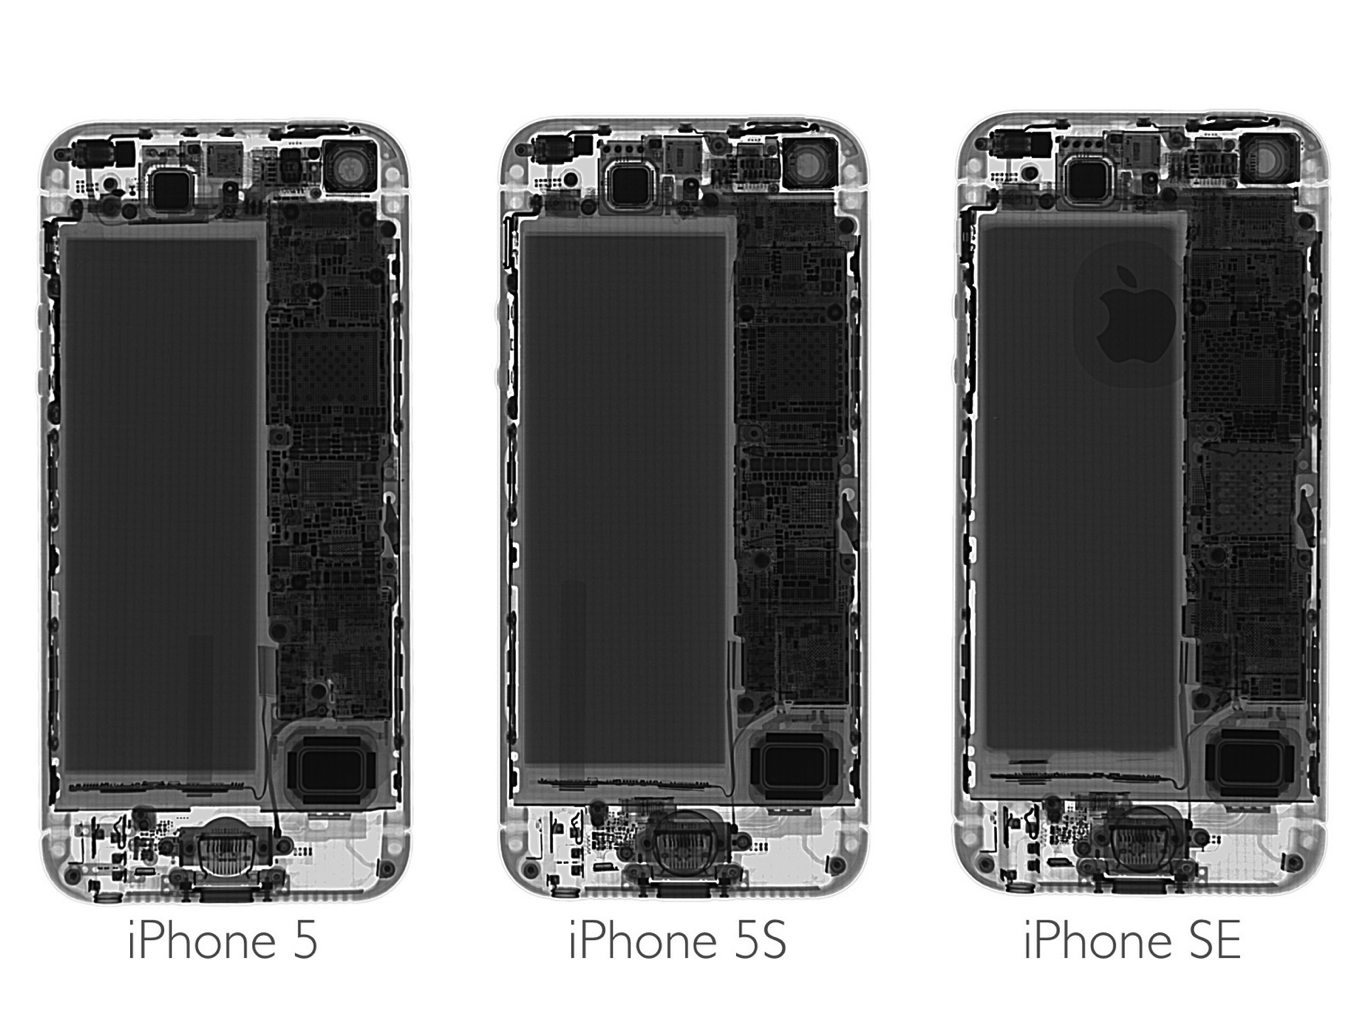 Slagschip Zakenman dek iFixit、「iPhone SE」を分解し、ディスプレイはiPhone 5sと交換可能であることを発見する | ソフトアンテナ